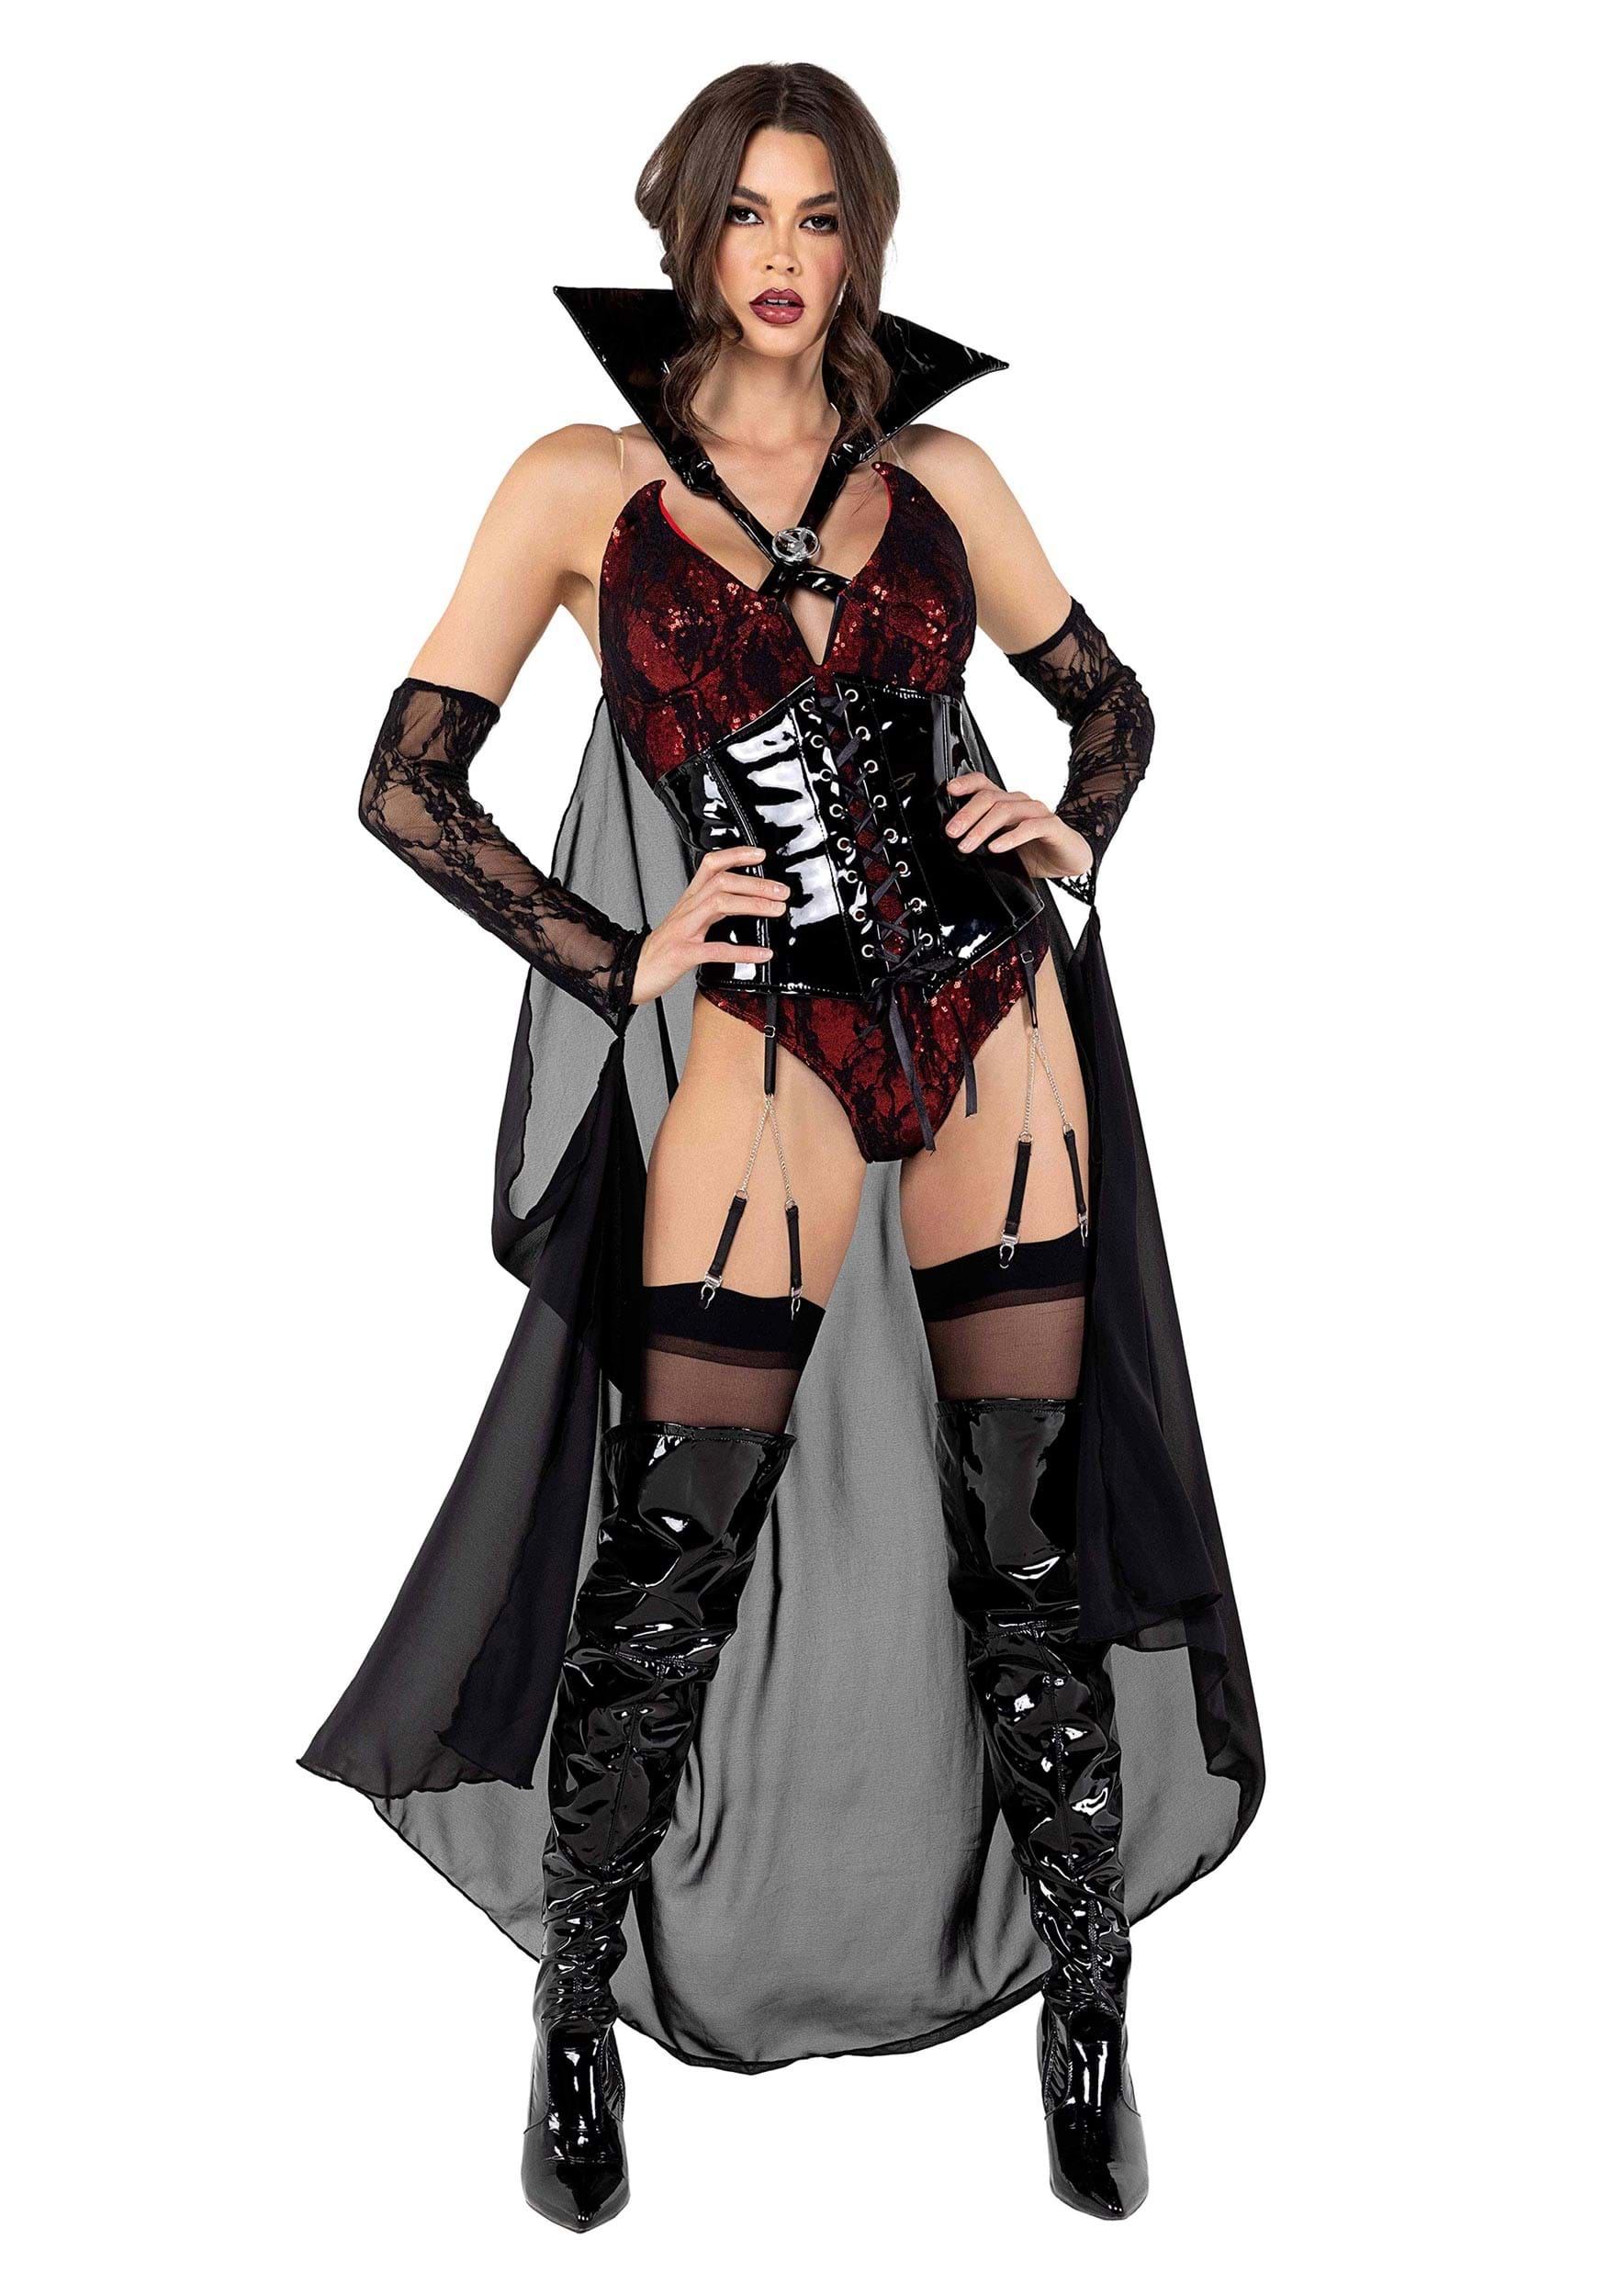 Photos - Fancy Dress Roma Playboy Vampire Women's Costume Black/Red ROPB115 